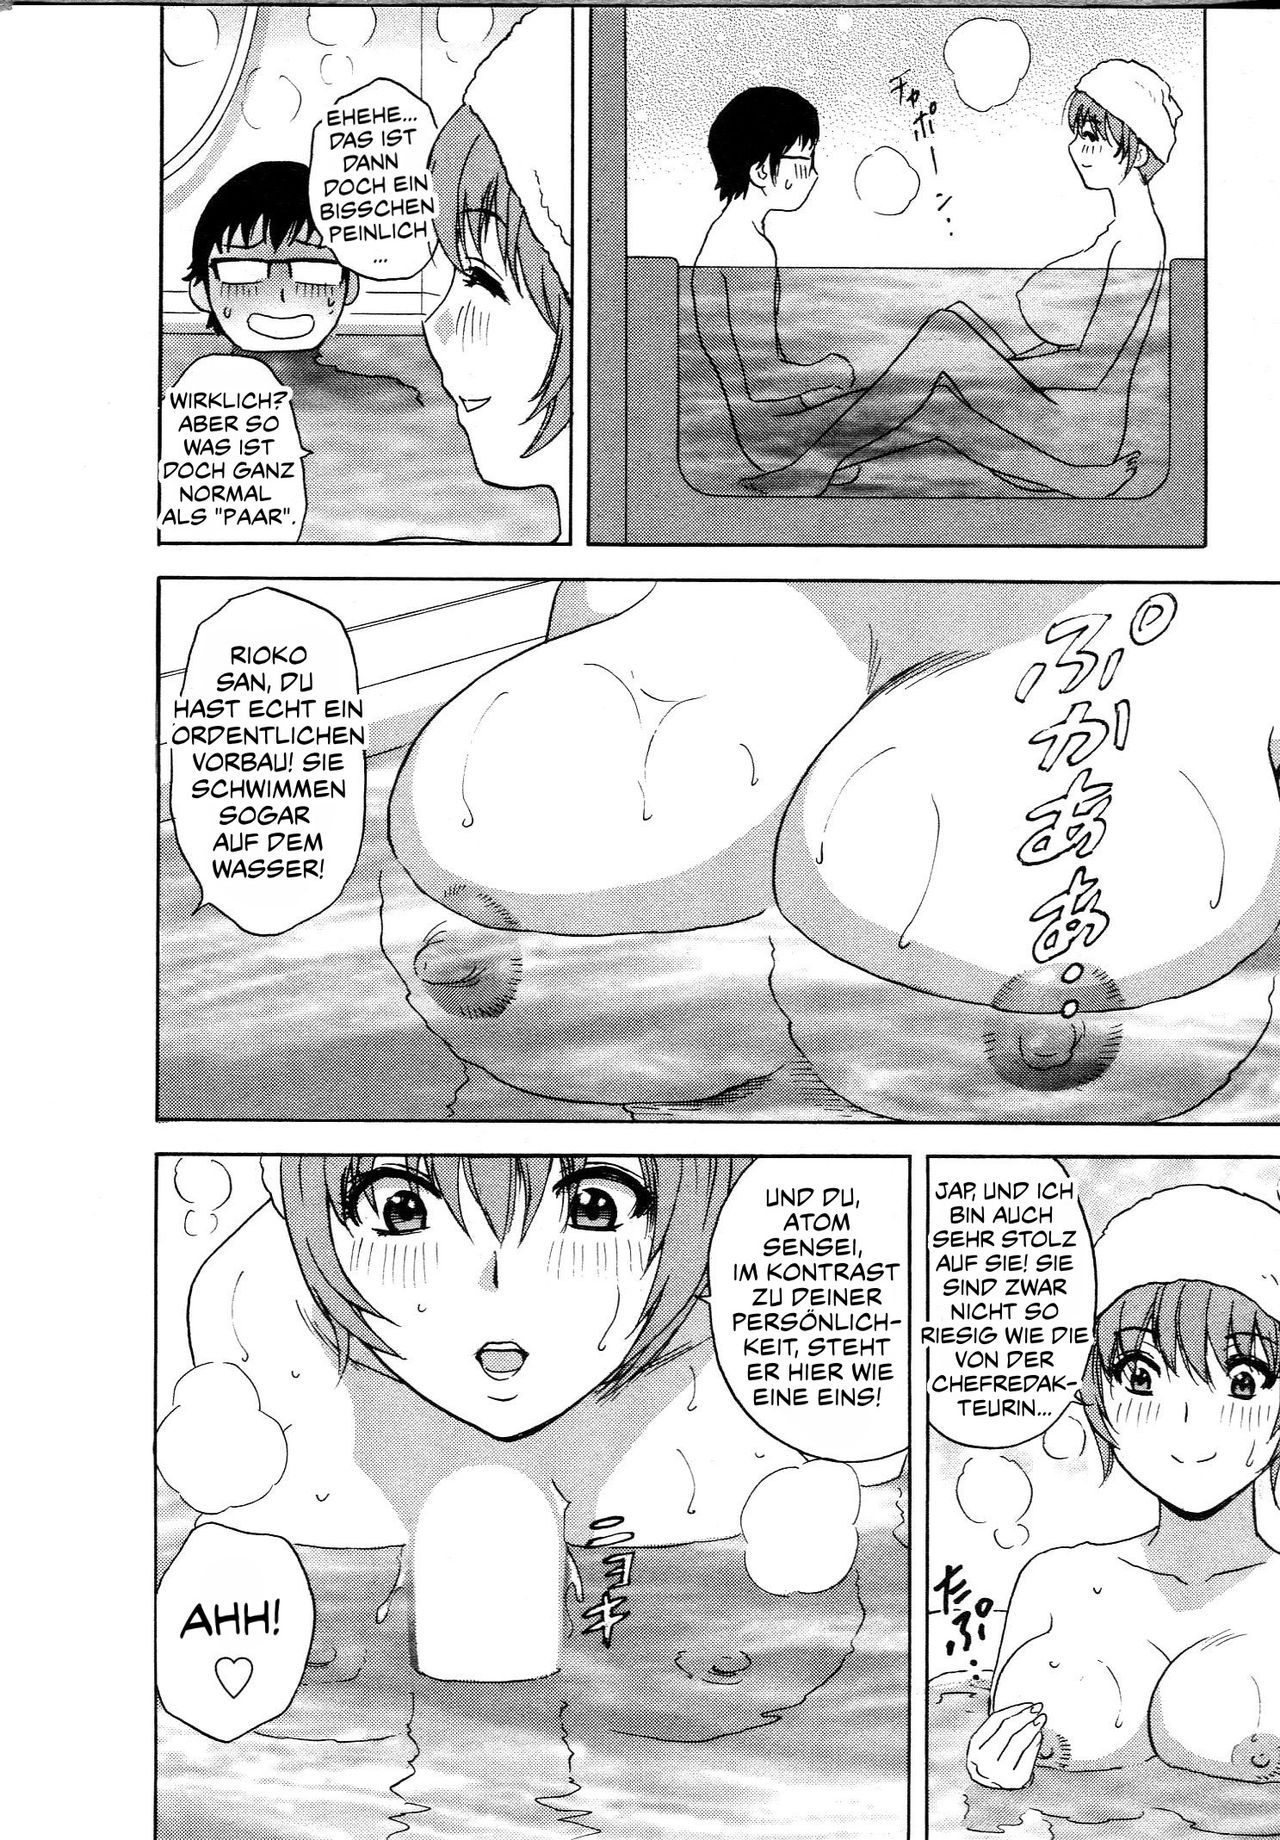 [Hidemaru] Eroina Hitoduma - Manga no youna Hitozuma to no Hibi 2 | Life with Married Women Just Like a Manga 2 [German] [SchmidtSST] 164